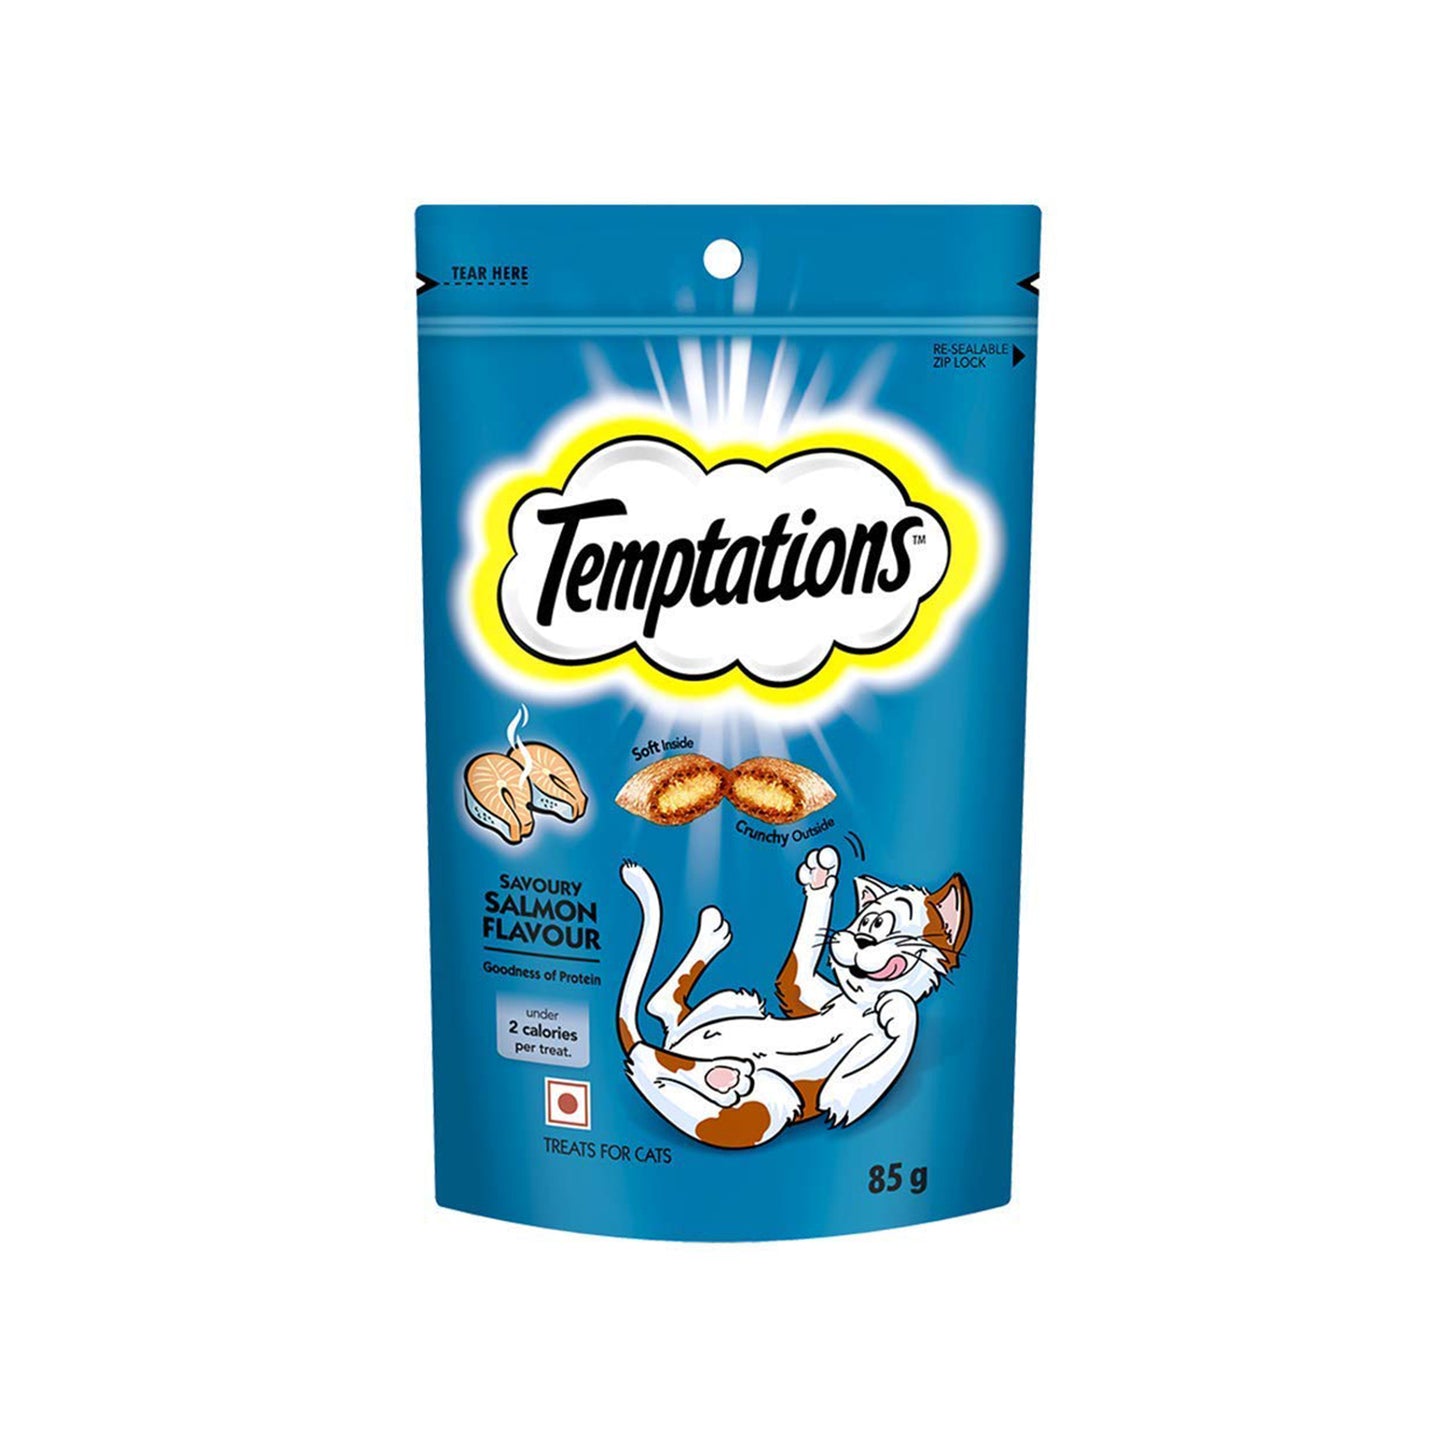 Temptations - Cat Treat Savoury Salmon Flavour